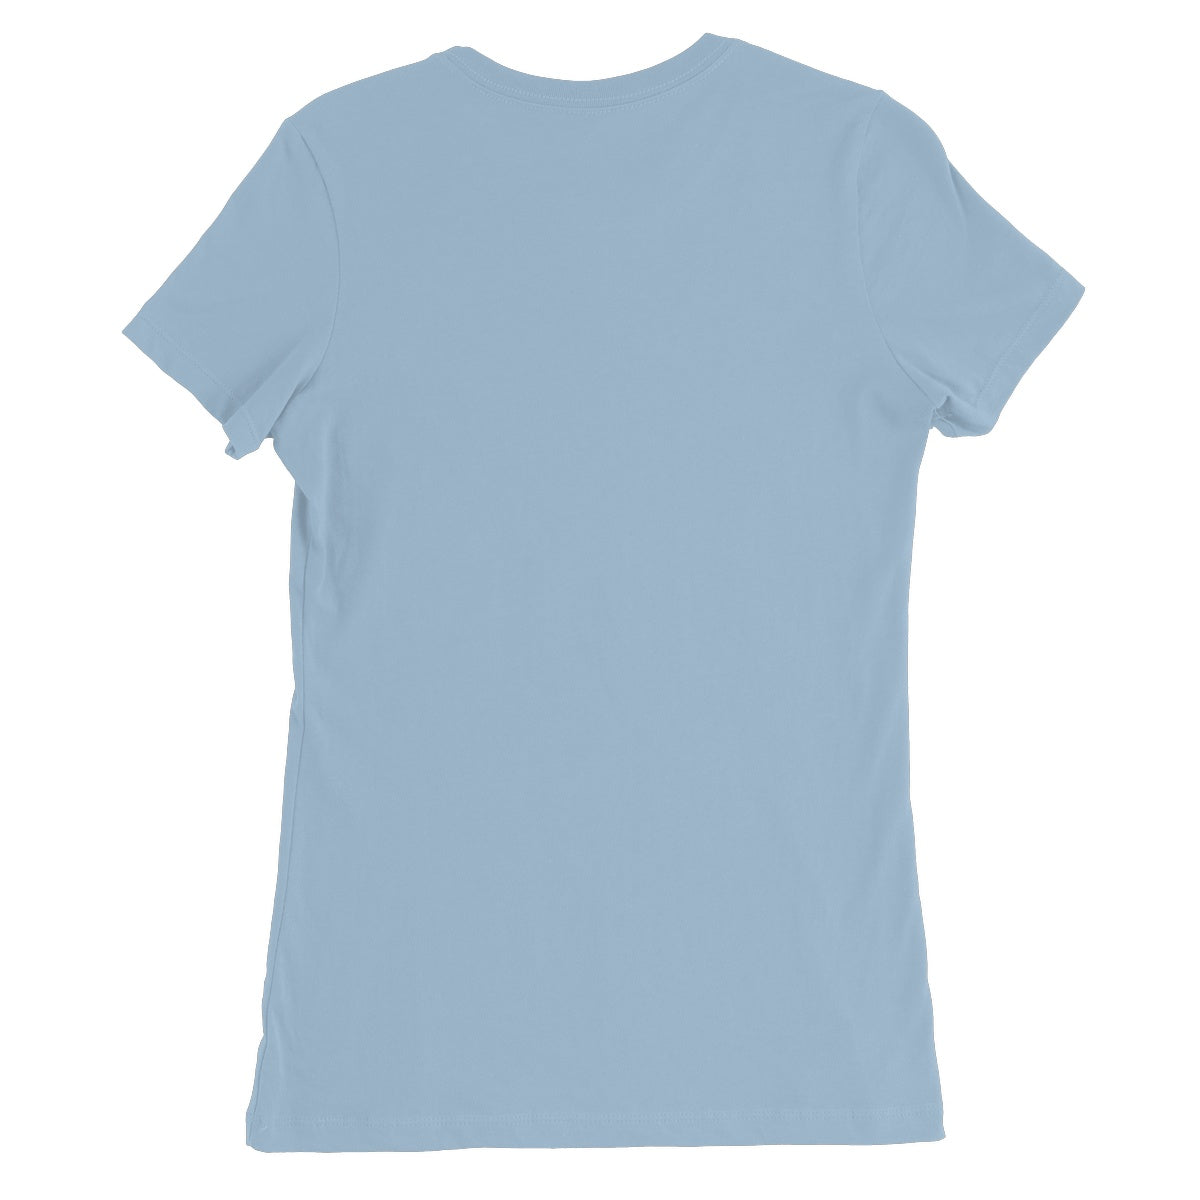 Overwatch D.VA Bunny Women's Favourite T-Shirt Gapo Goods